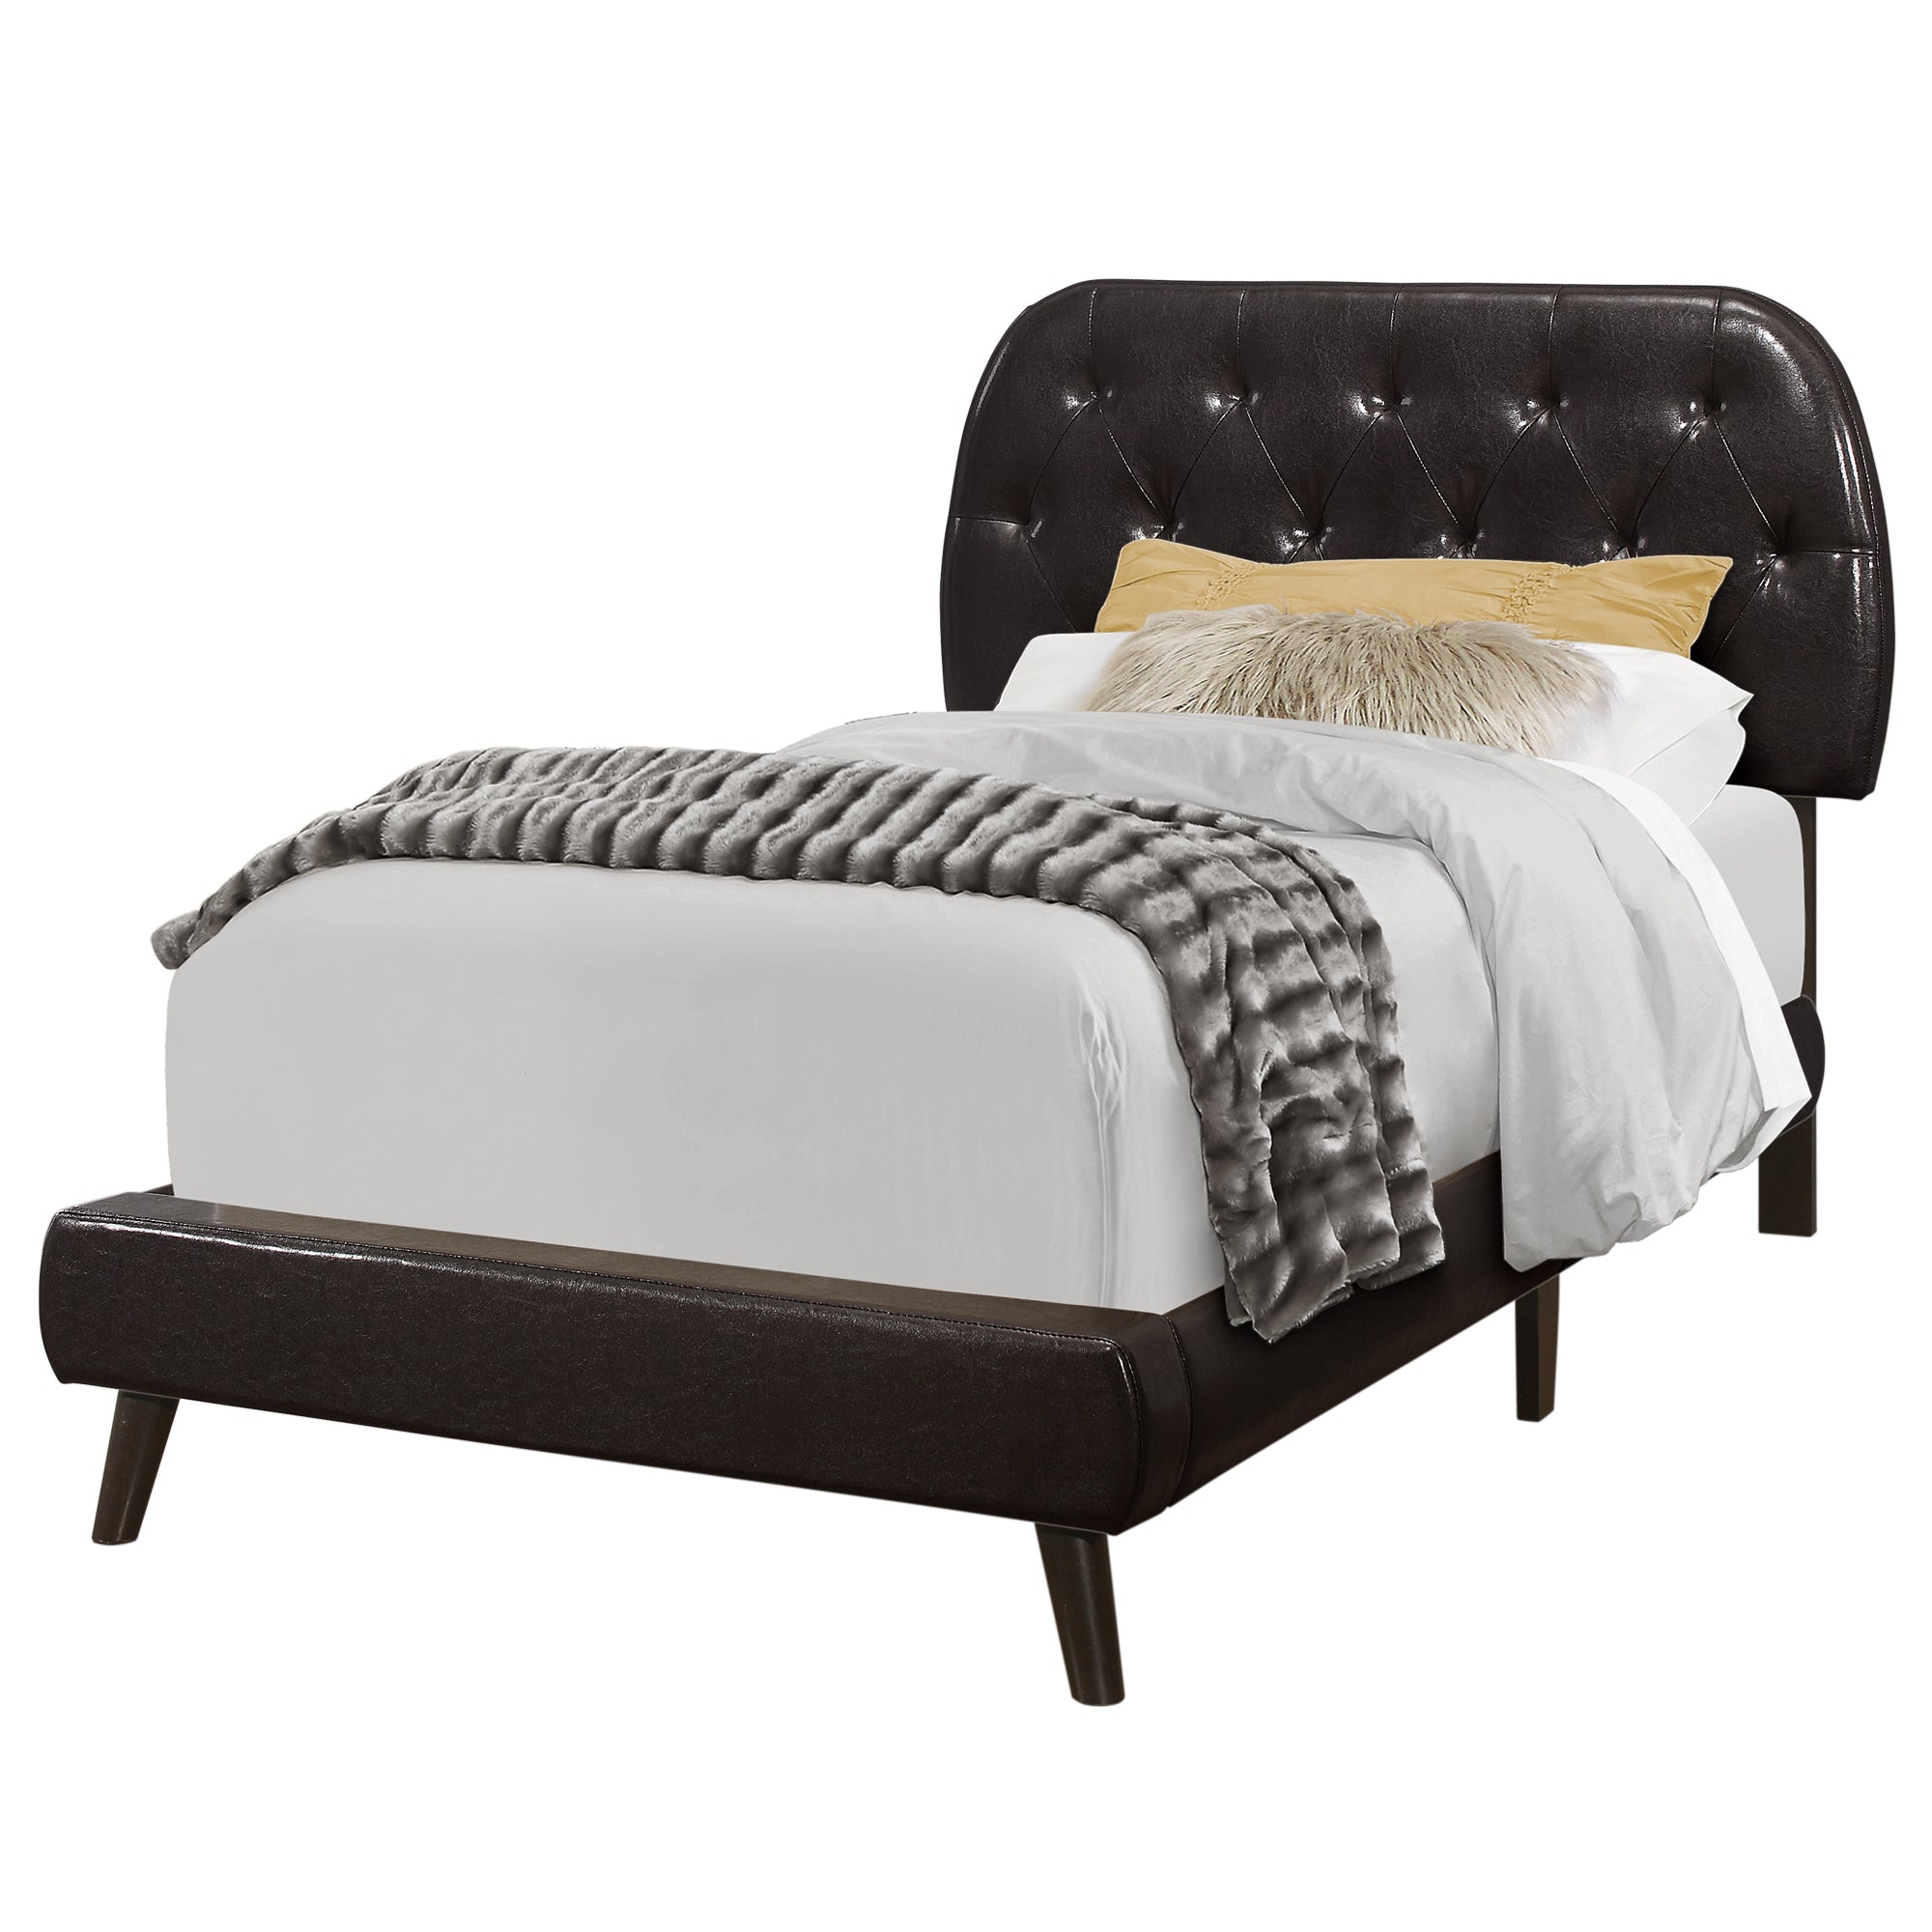 MN-265982T    Bed, Frame, Platform, Teen, Bedroom, Upholstered, Twin Size, Linen Look Fabric, Wood Legs, Dark Brown, Black, Contemporary, Modern